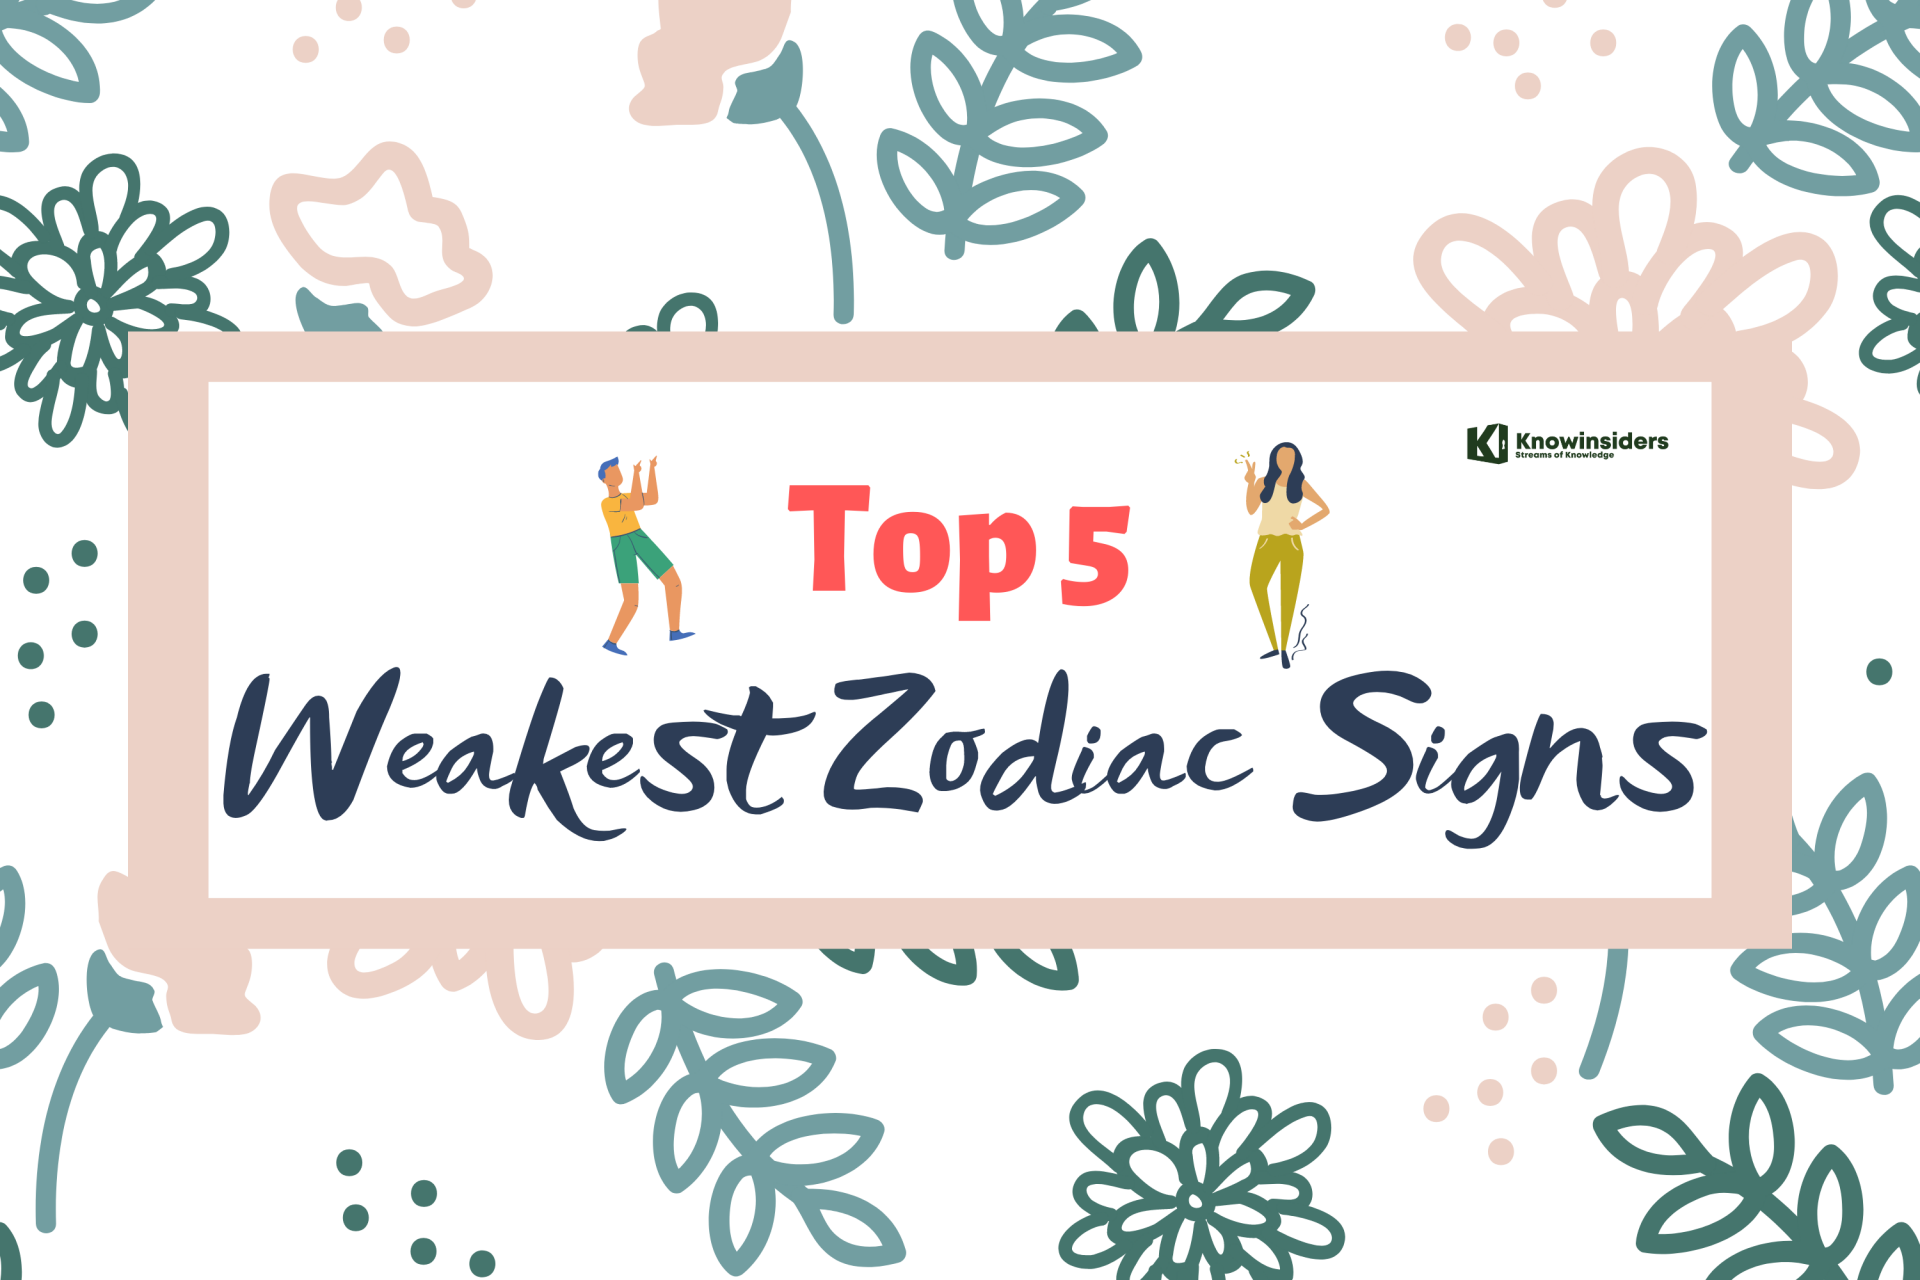 Top 5 Weakest Zodiac Signs